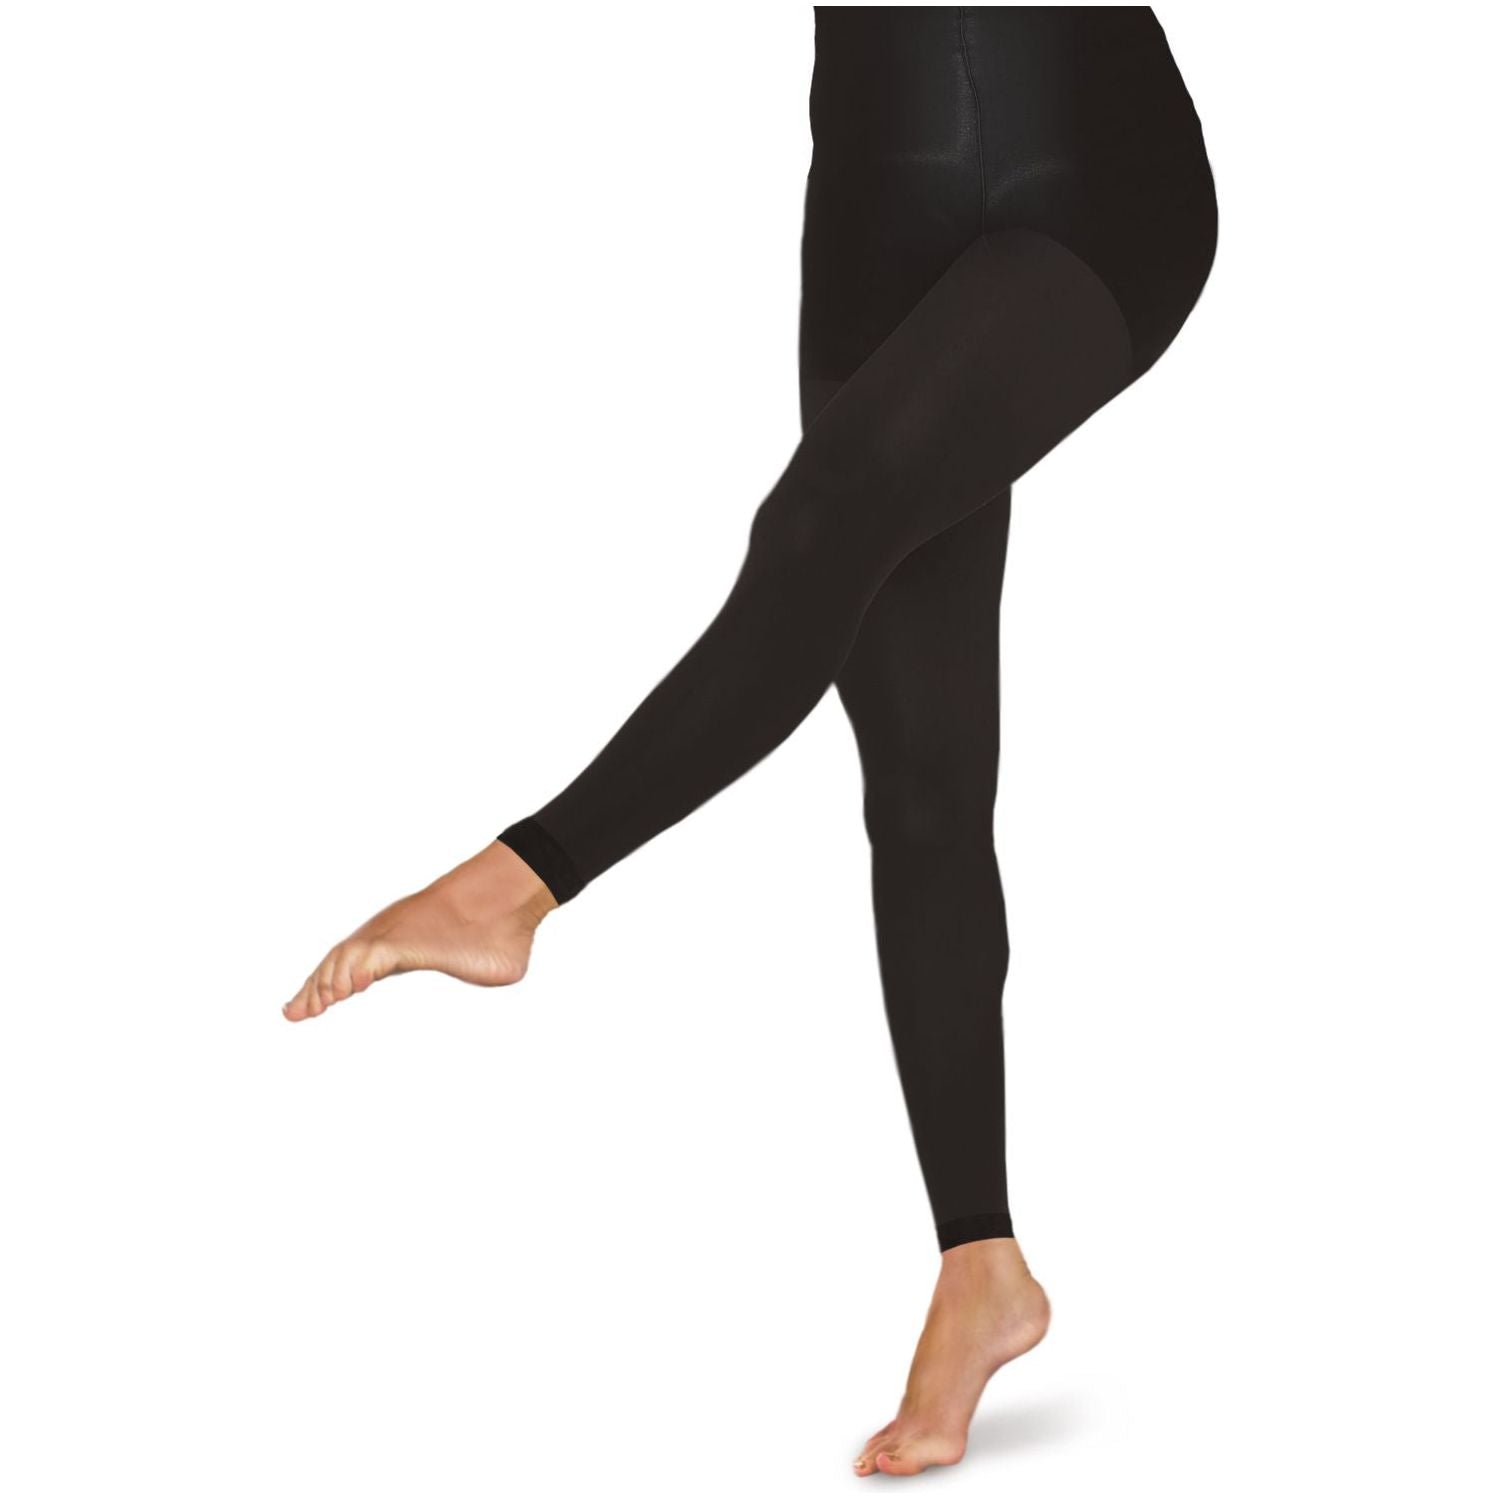 Compression Pantyhose For Women & Men 8-15mmgh Waist High